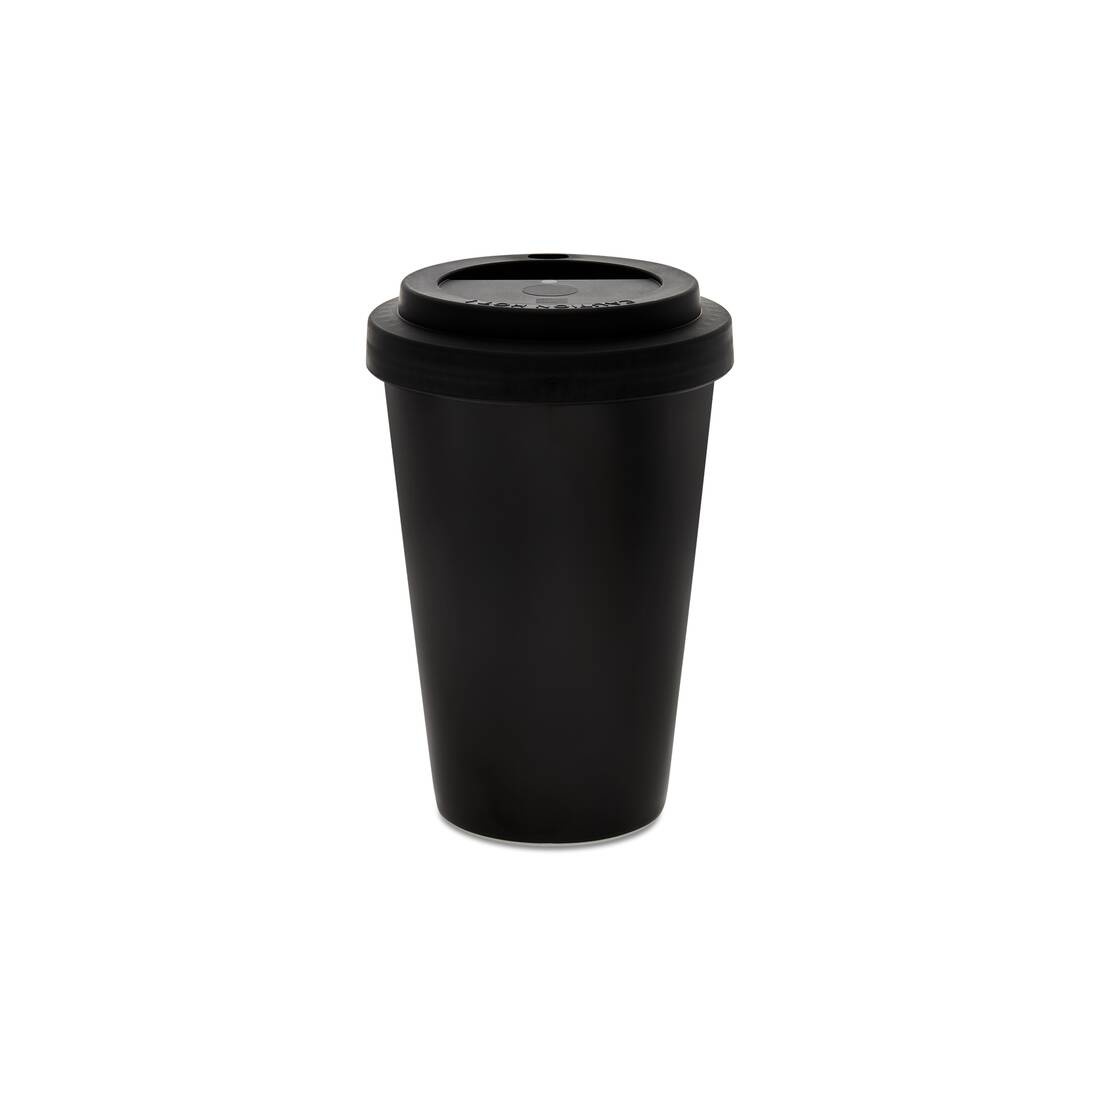 Dubai Coffee Cup in Black - 2